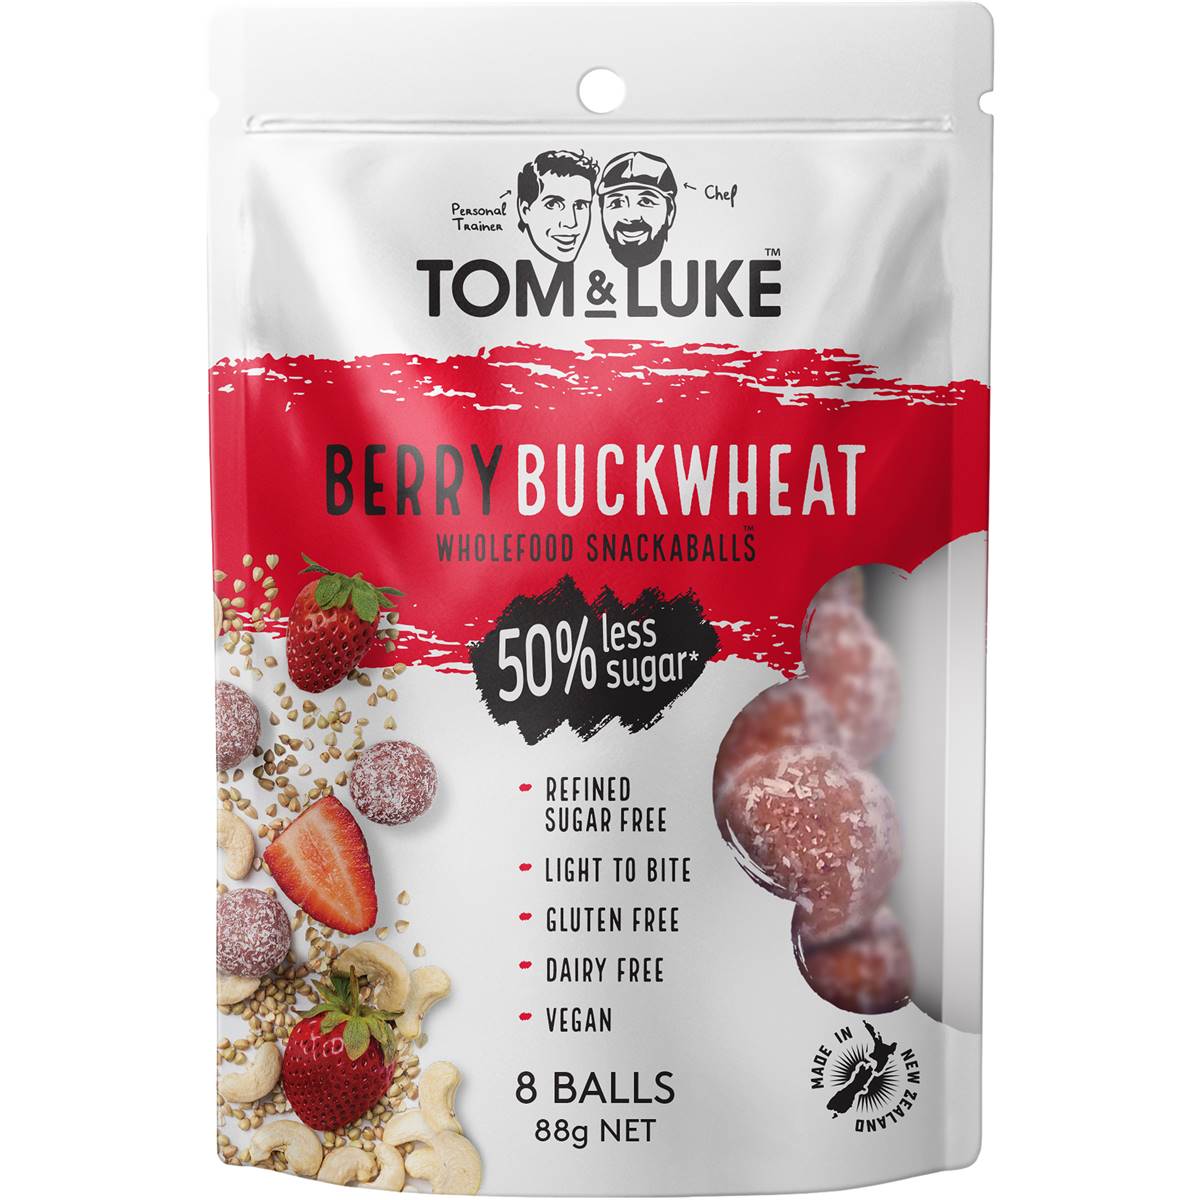 Calories in Tom & Luke Berry Buckwheat Snackaballs